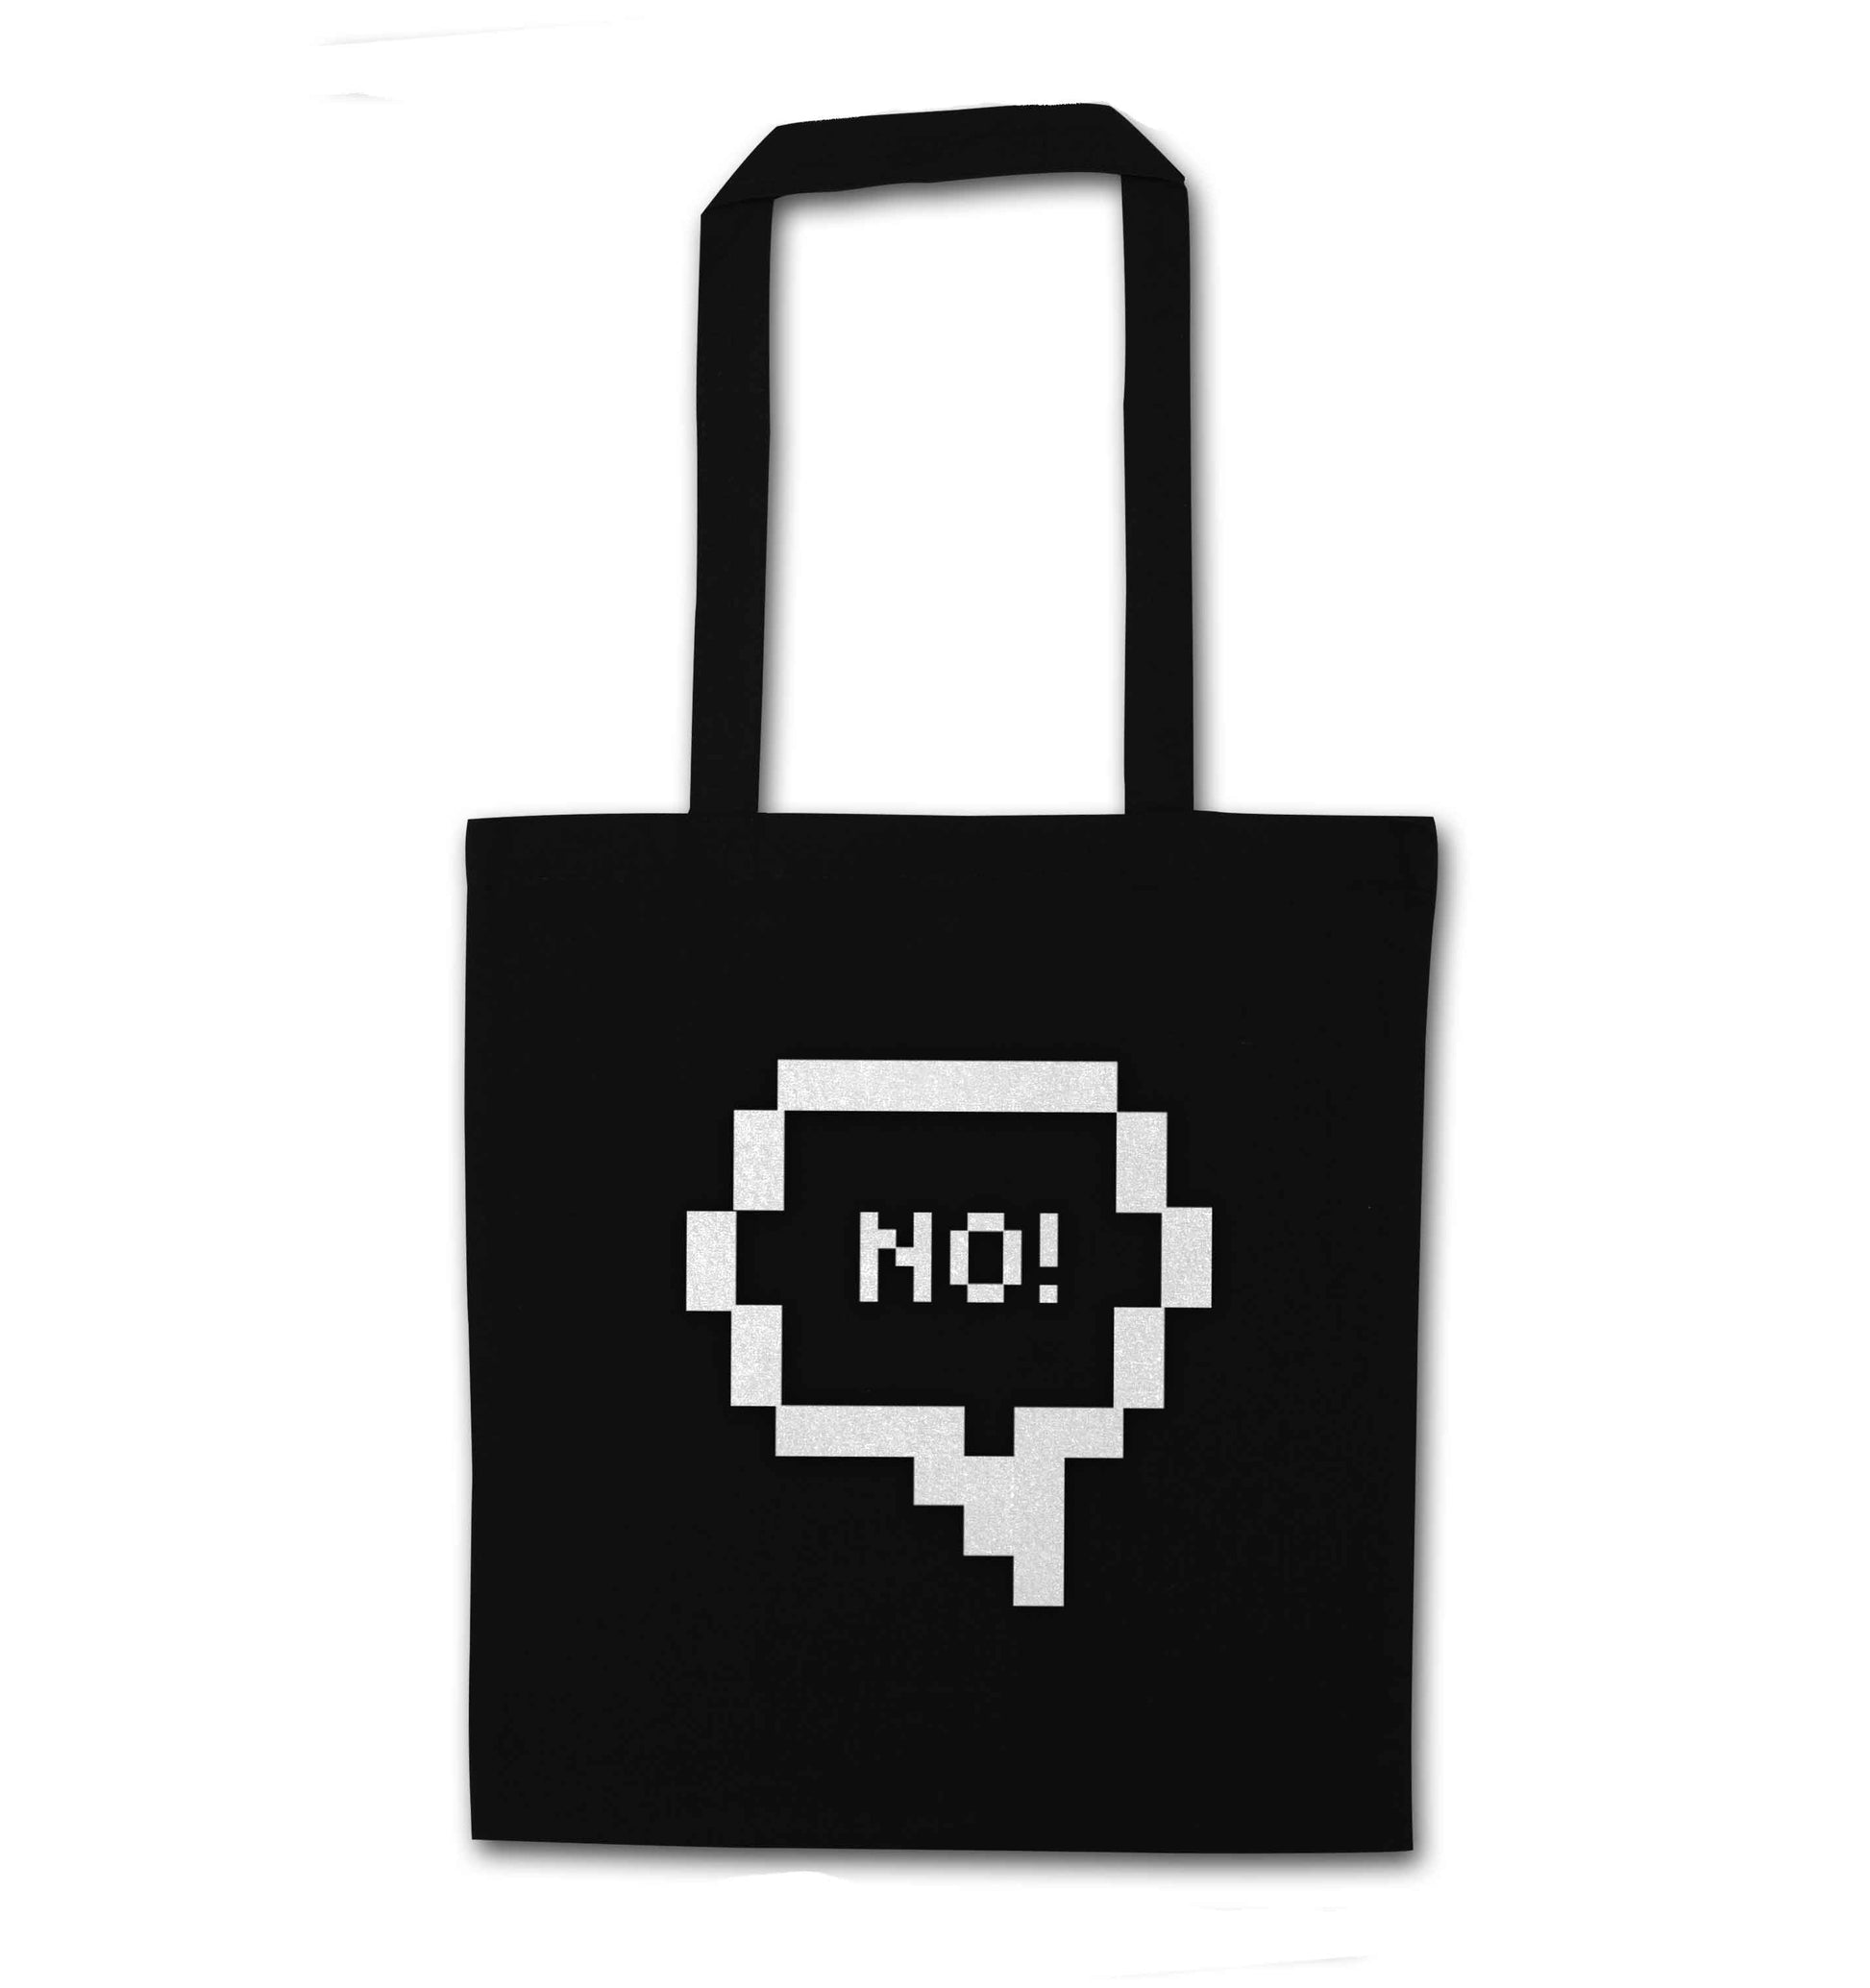 No black tote bag